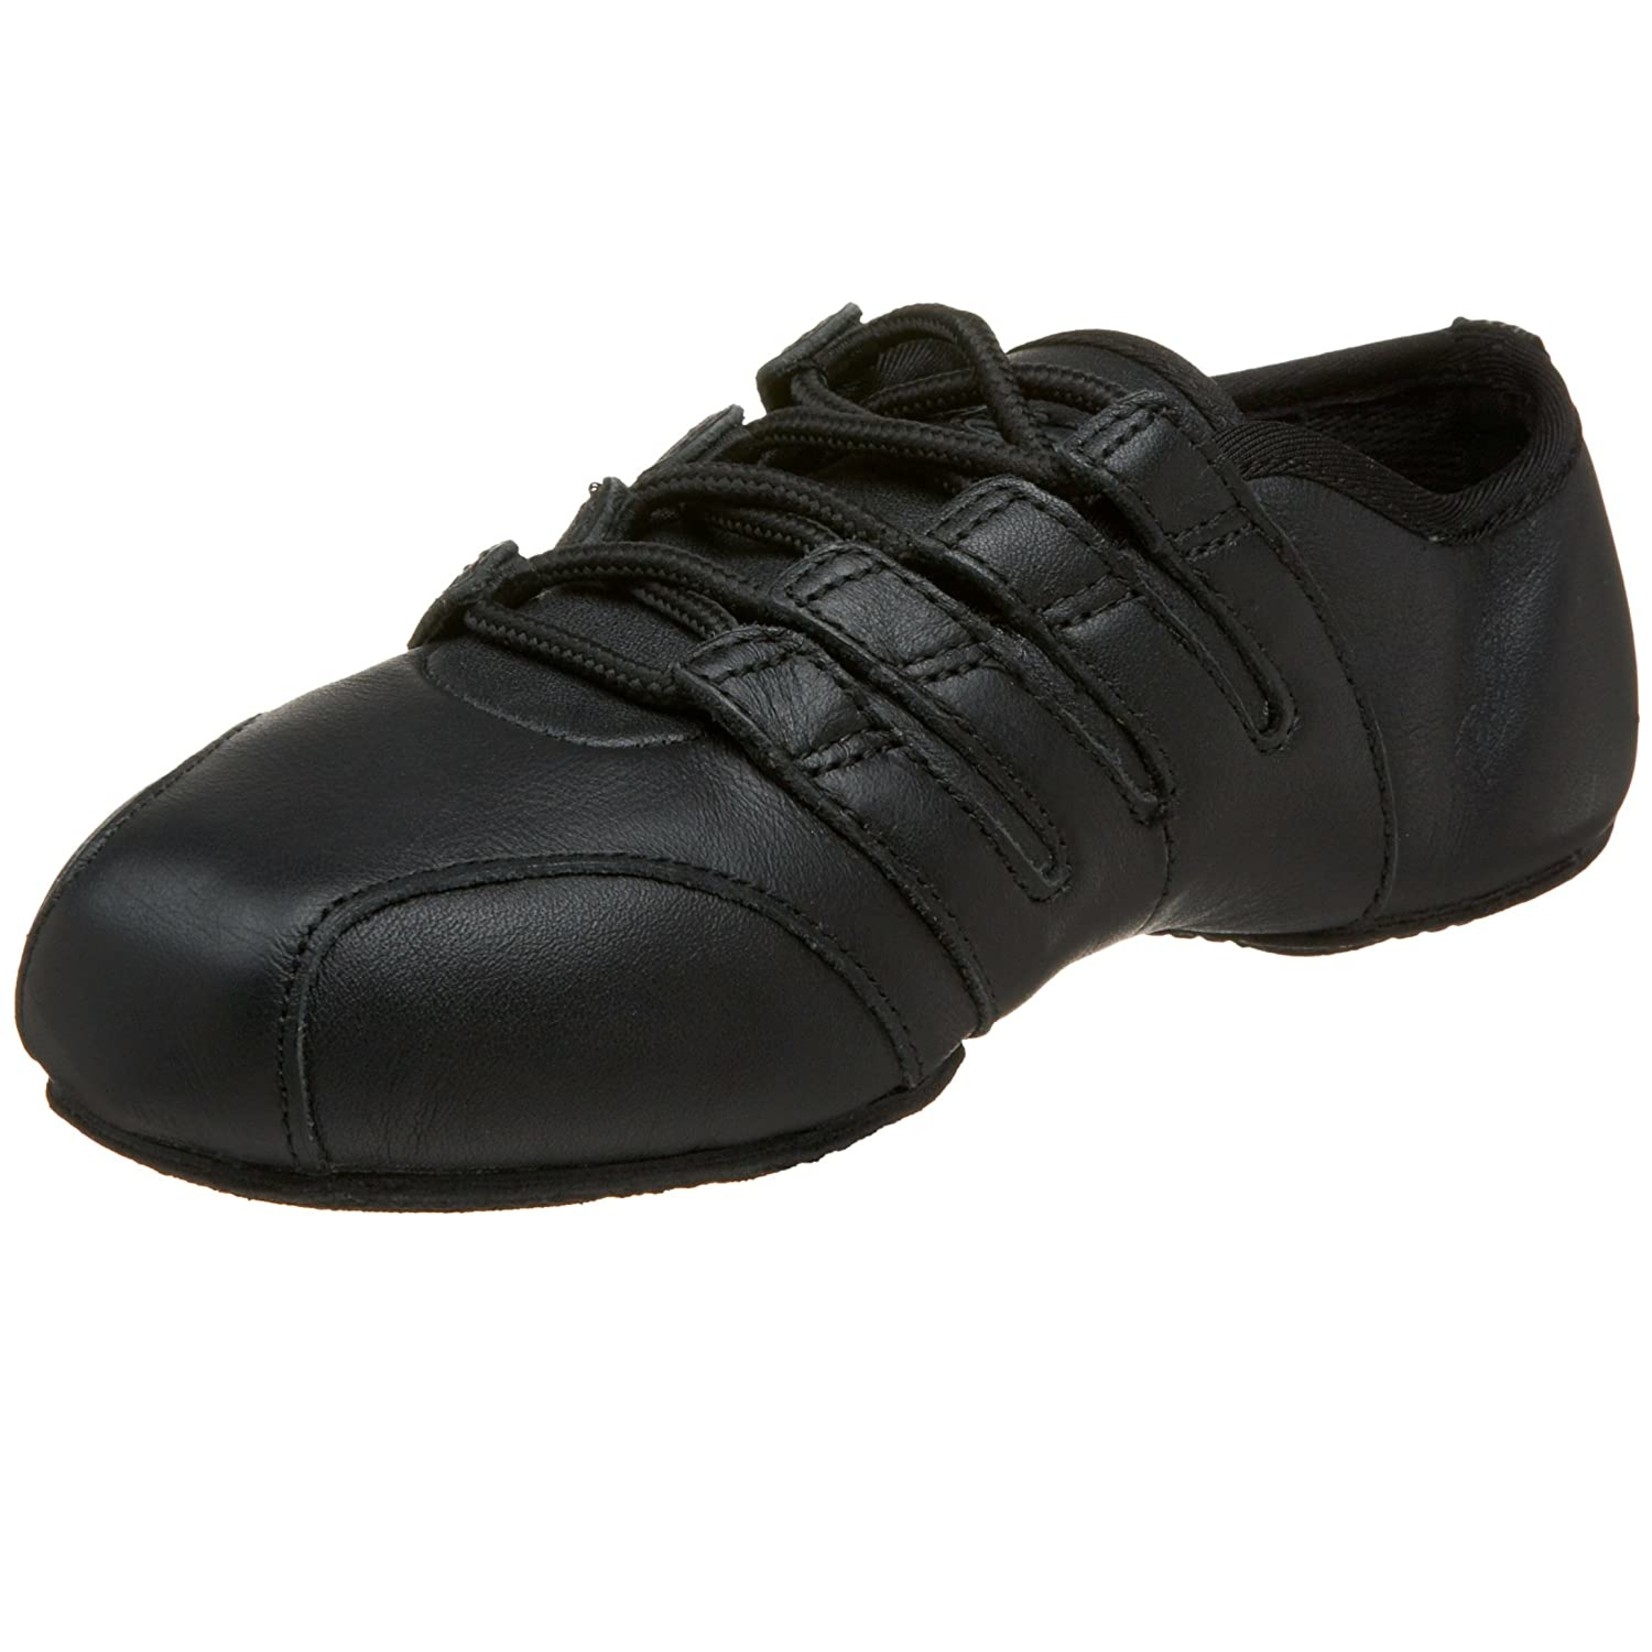 Capezio PP11 Jazz Shoe Black 4.5 M